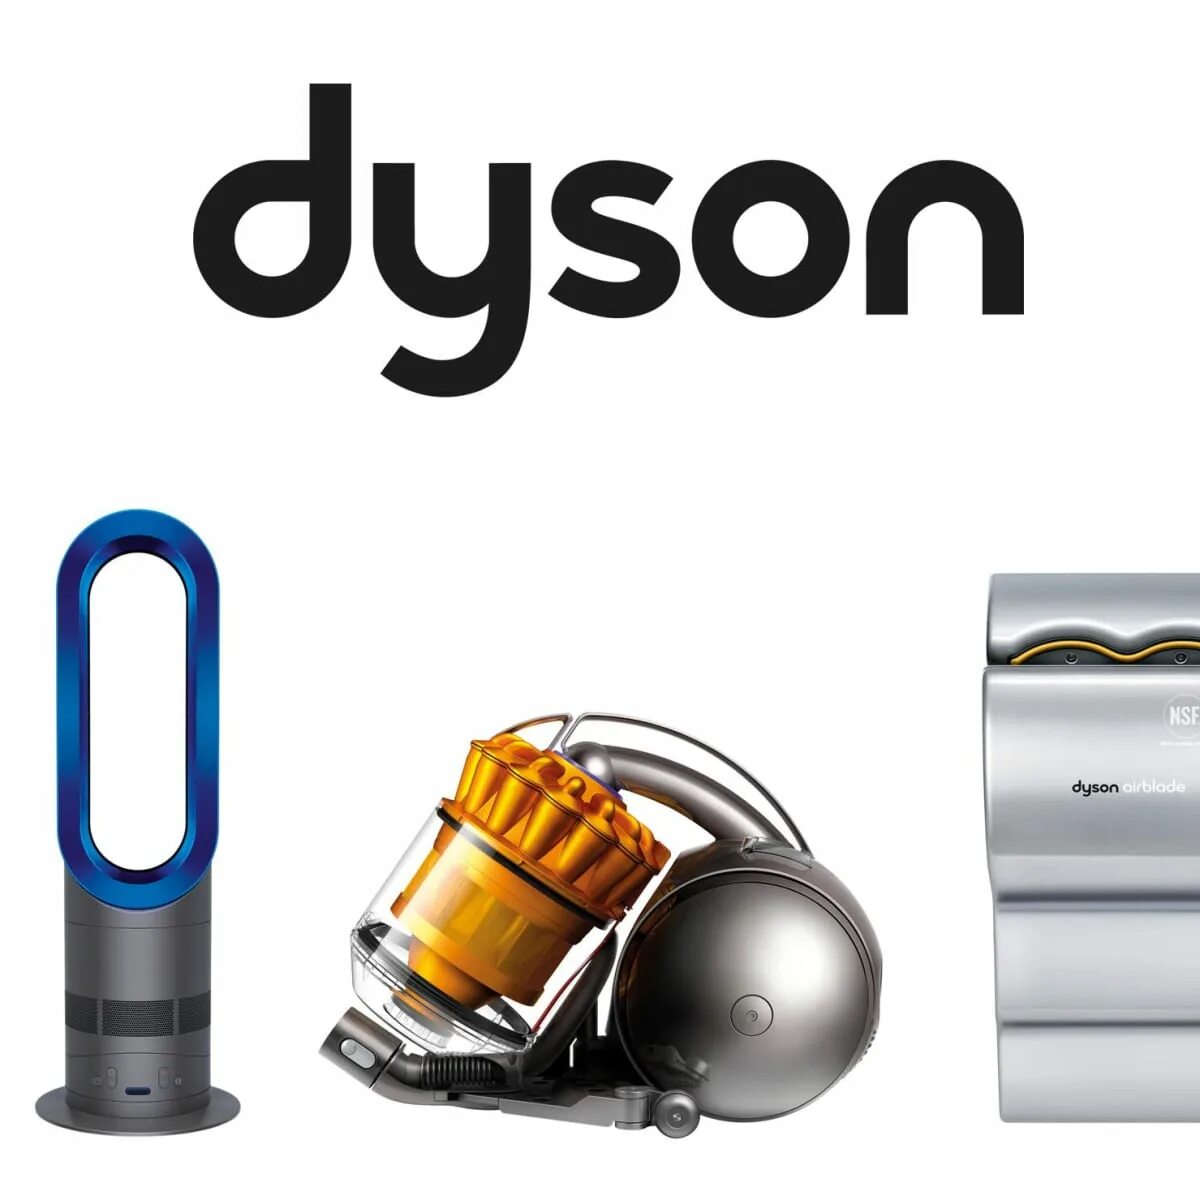 Dyson. Дайсон бренд. Дайсон логотип. Пылесос Dyson логотип. Продать дайсон